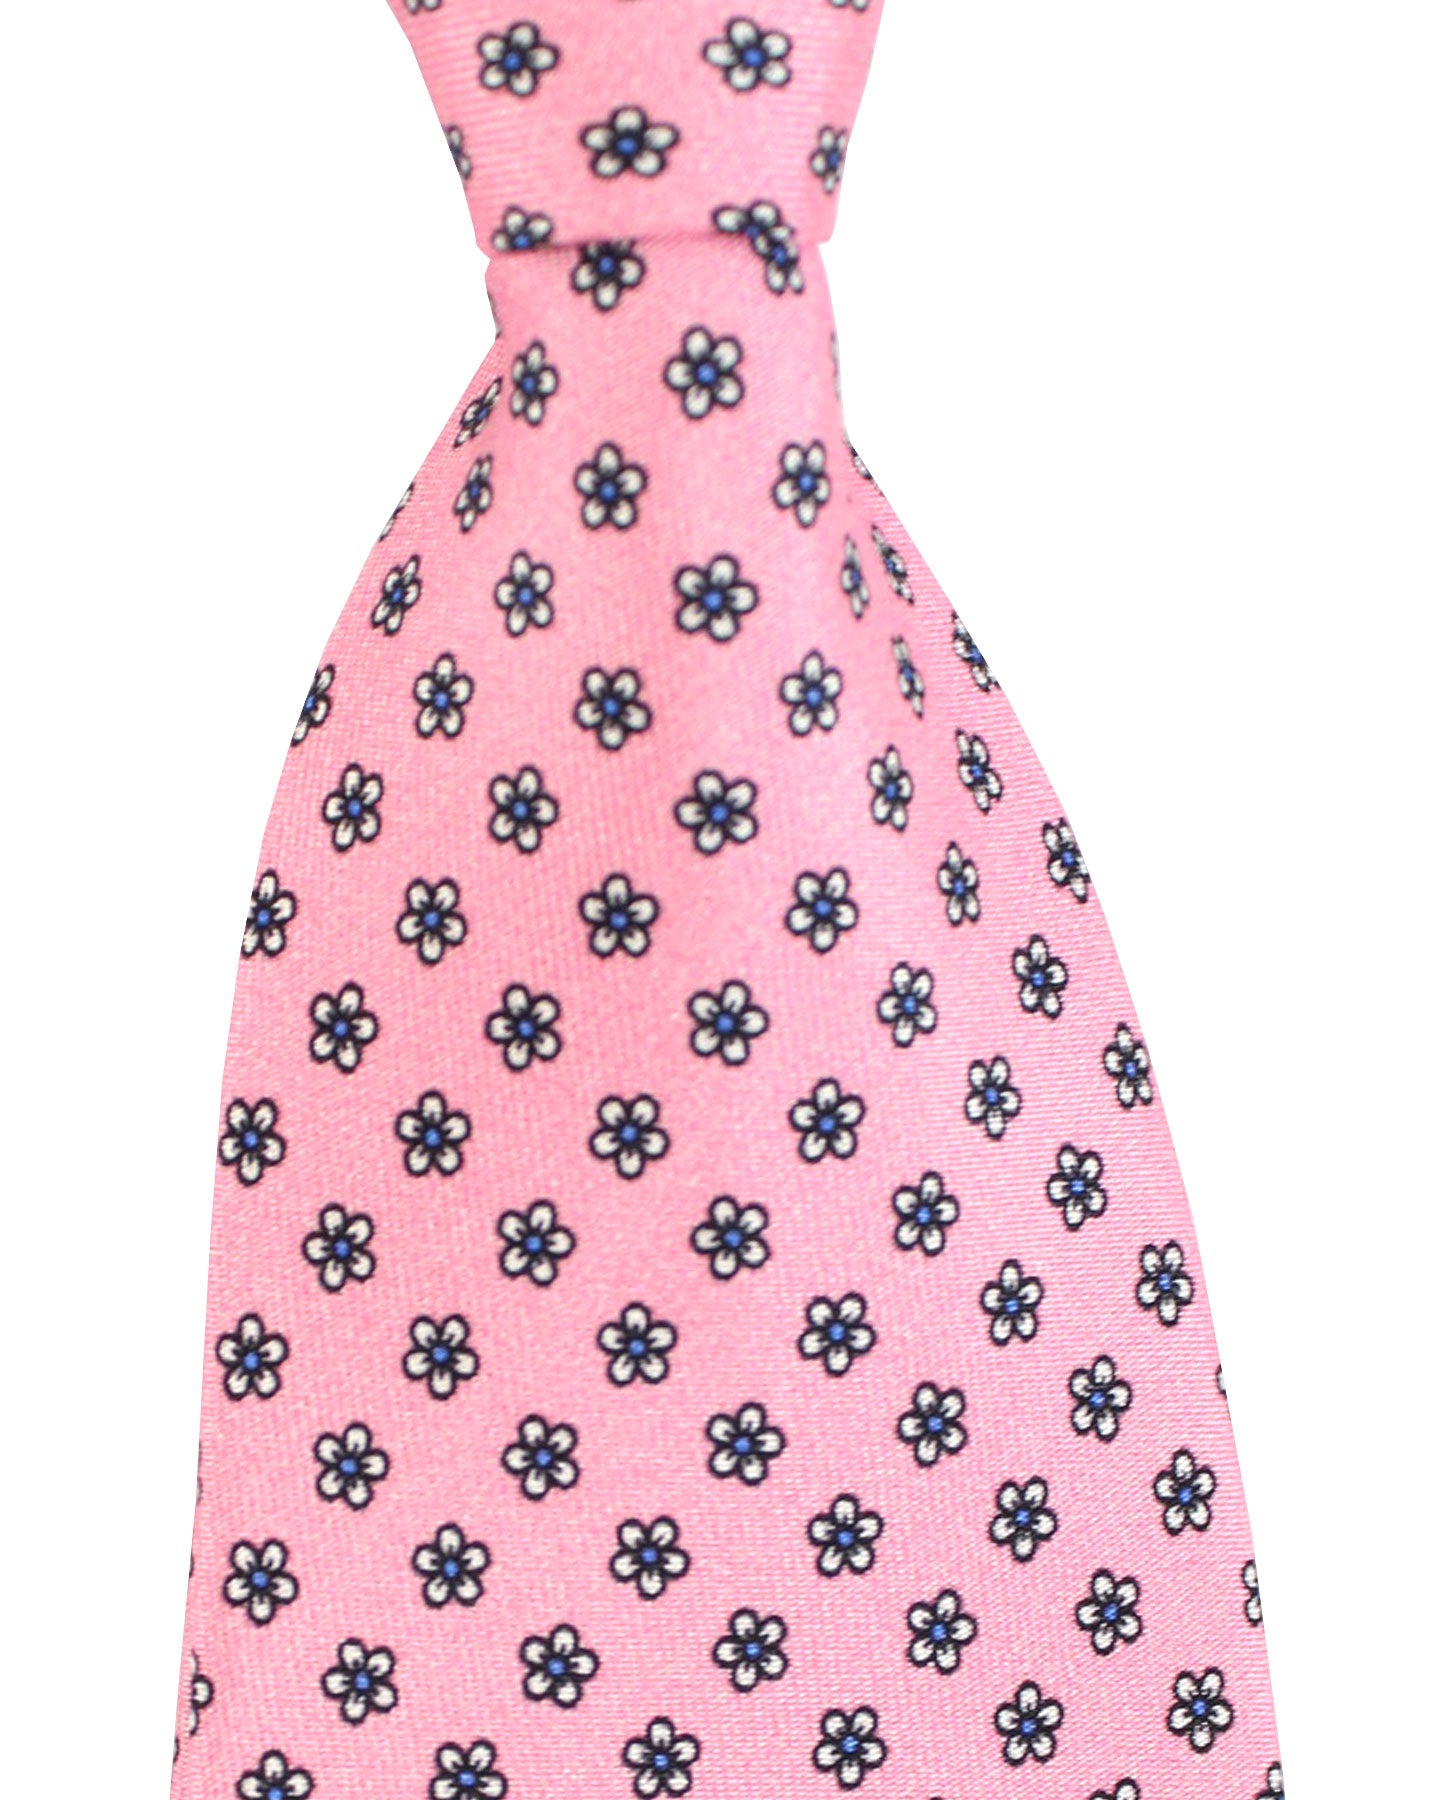 Luigi Borrelli Silk Tie Pink Mini Flowers